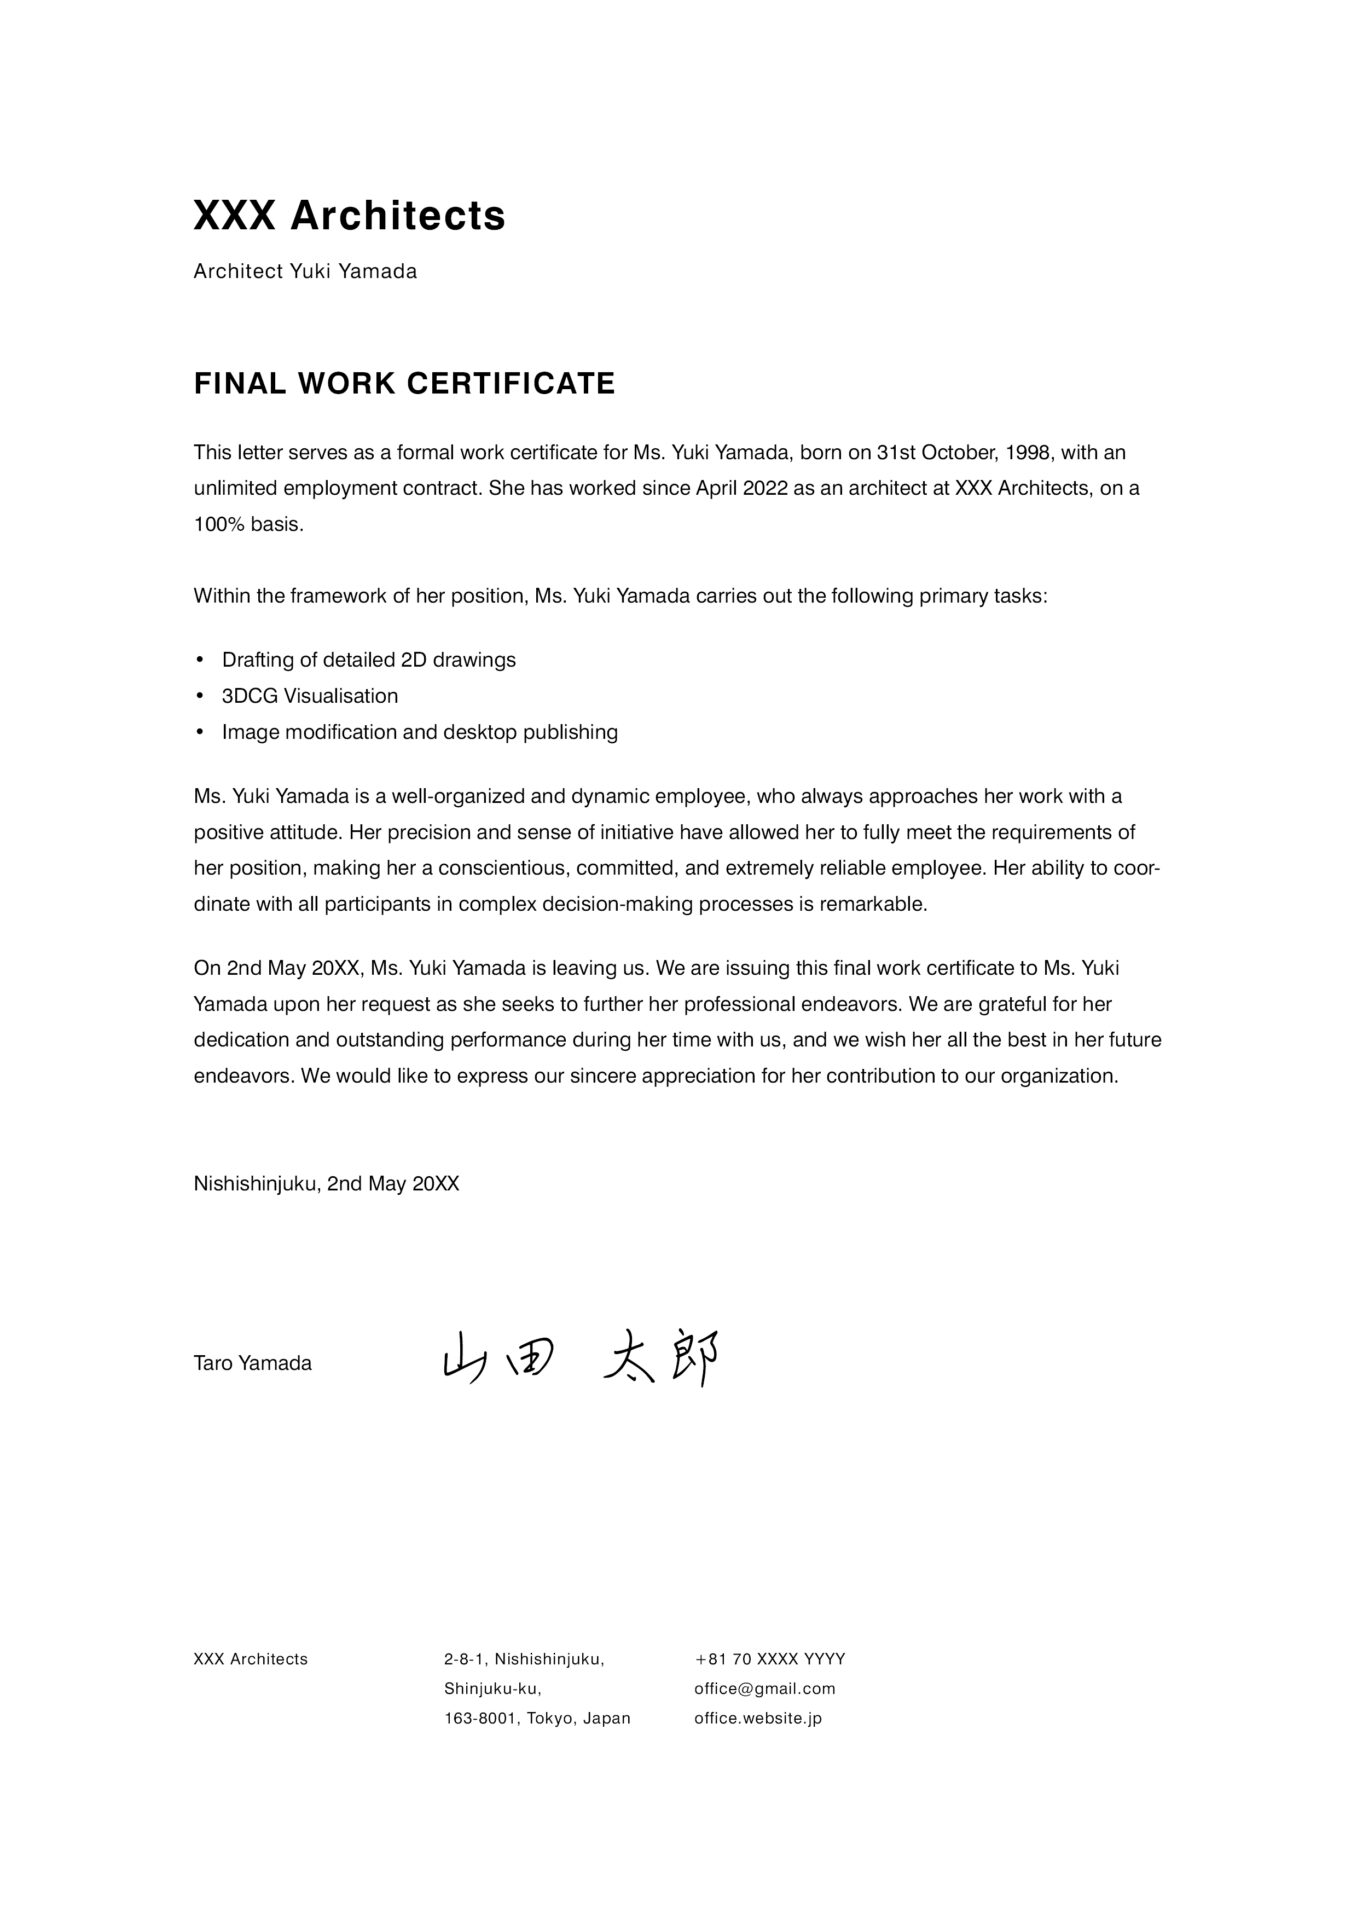 Final work certificate